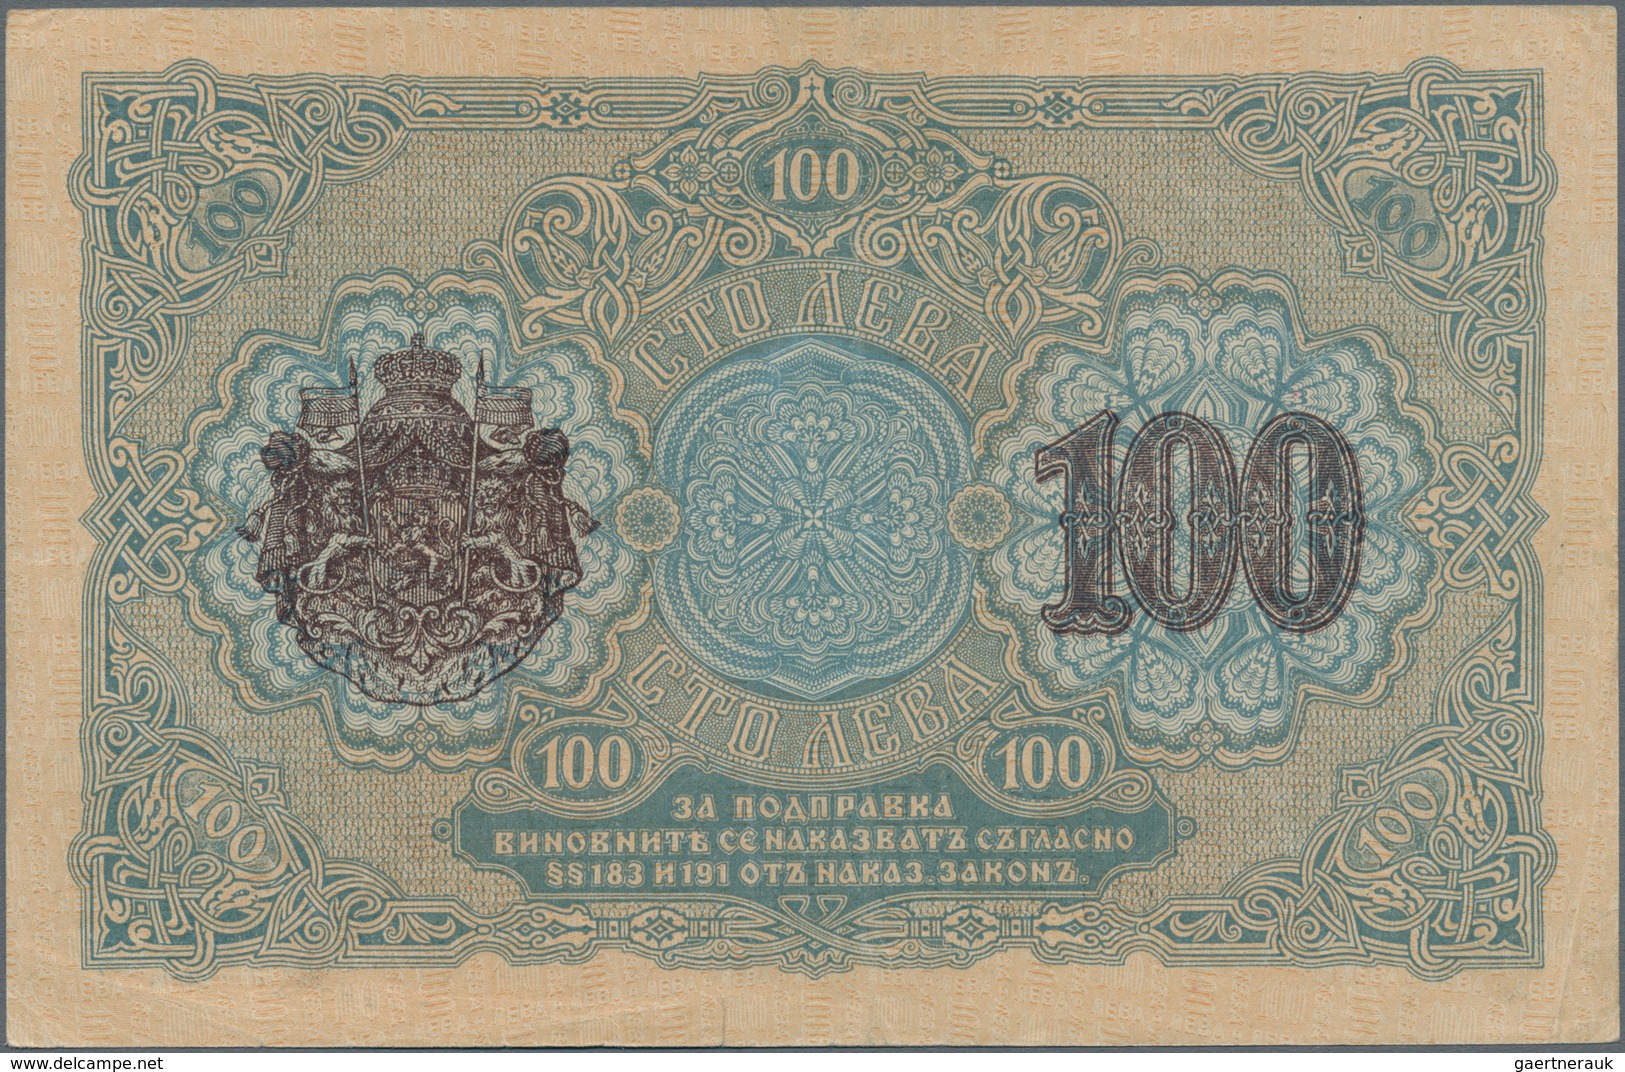 Bulgaria / Bulgarien: Very rare set with 8 banknotes comprising 10 Leva Srebro ND(1904) P.3b (VF), 2